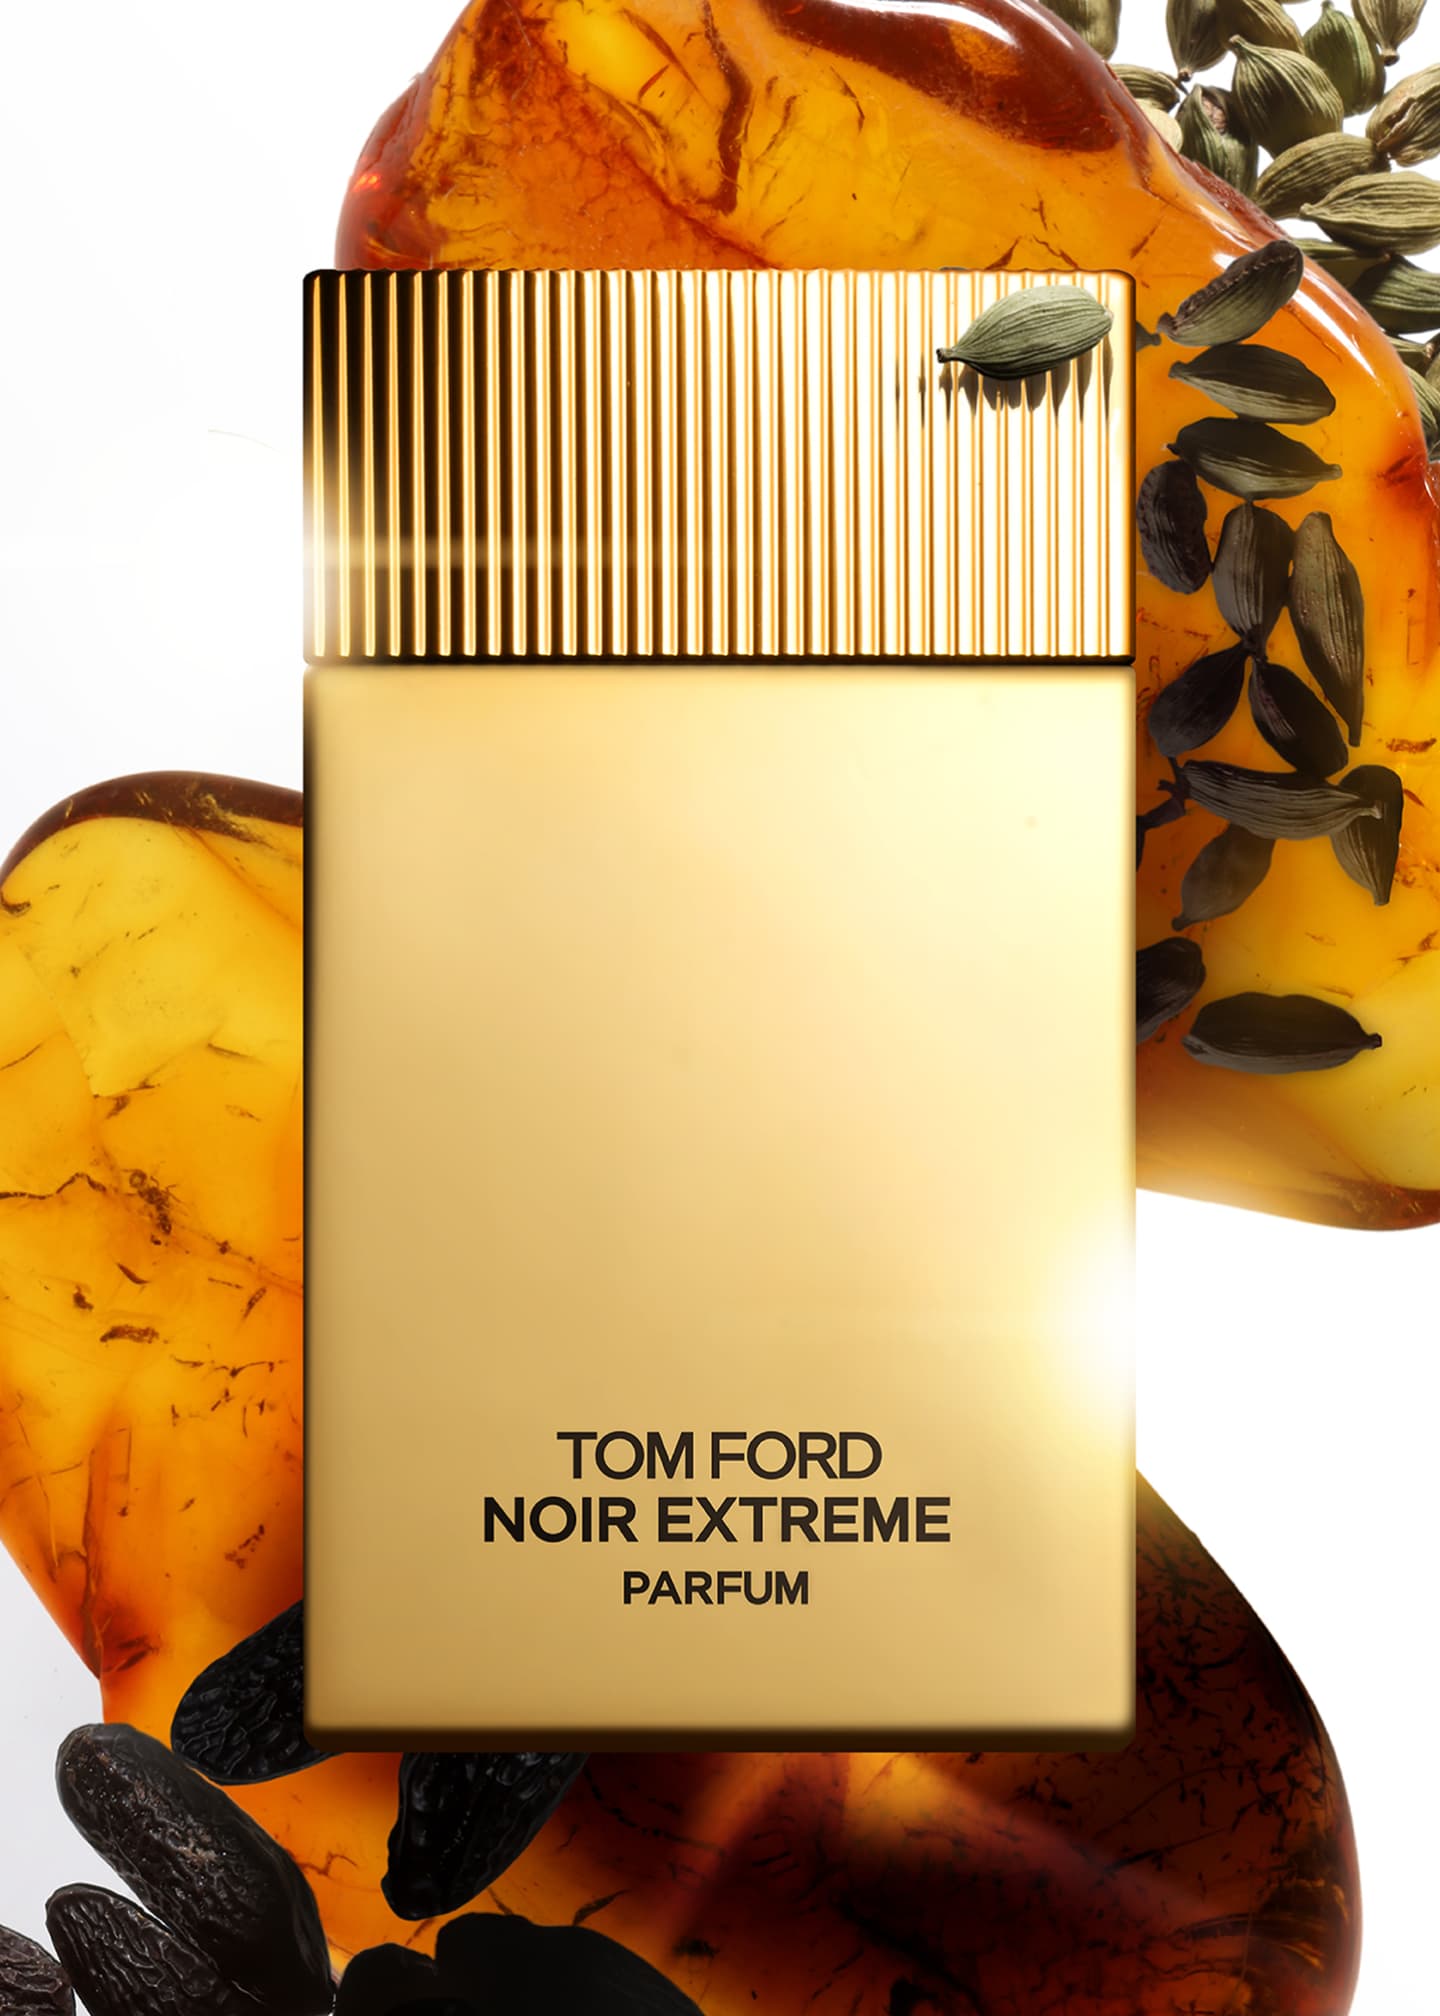 TOM FORD Noir Extreme Parfum, 1.7 oz. - Bergdorf Goodman